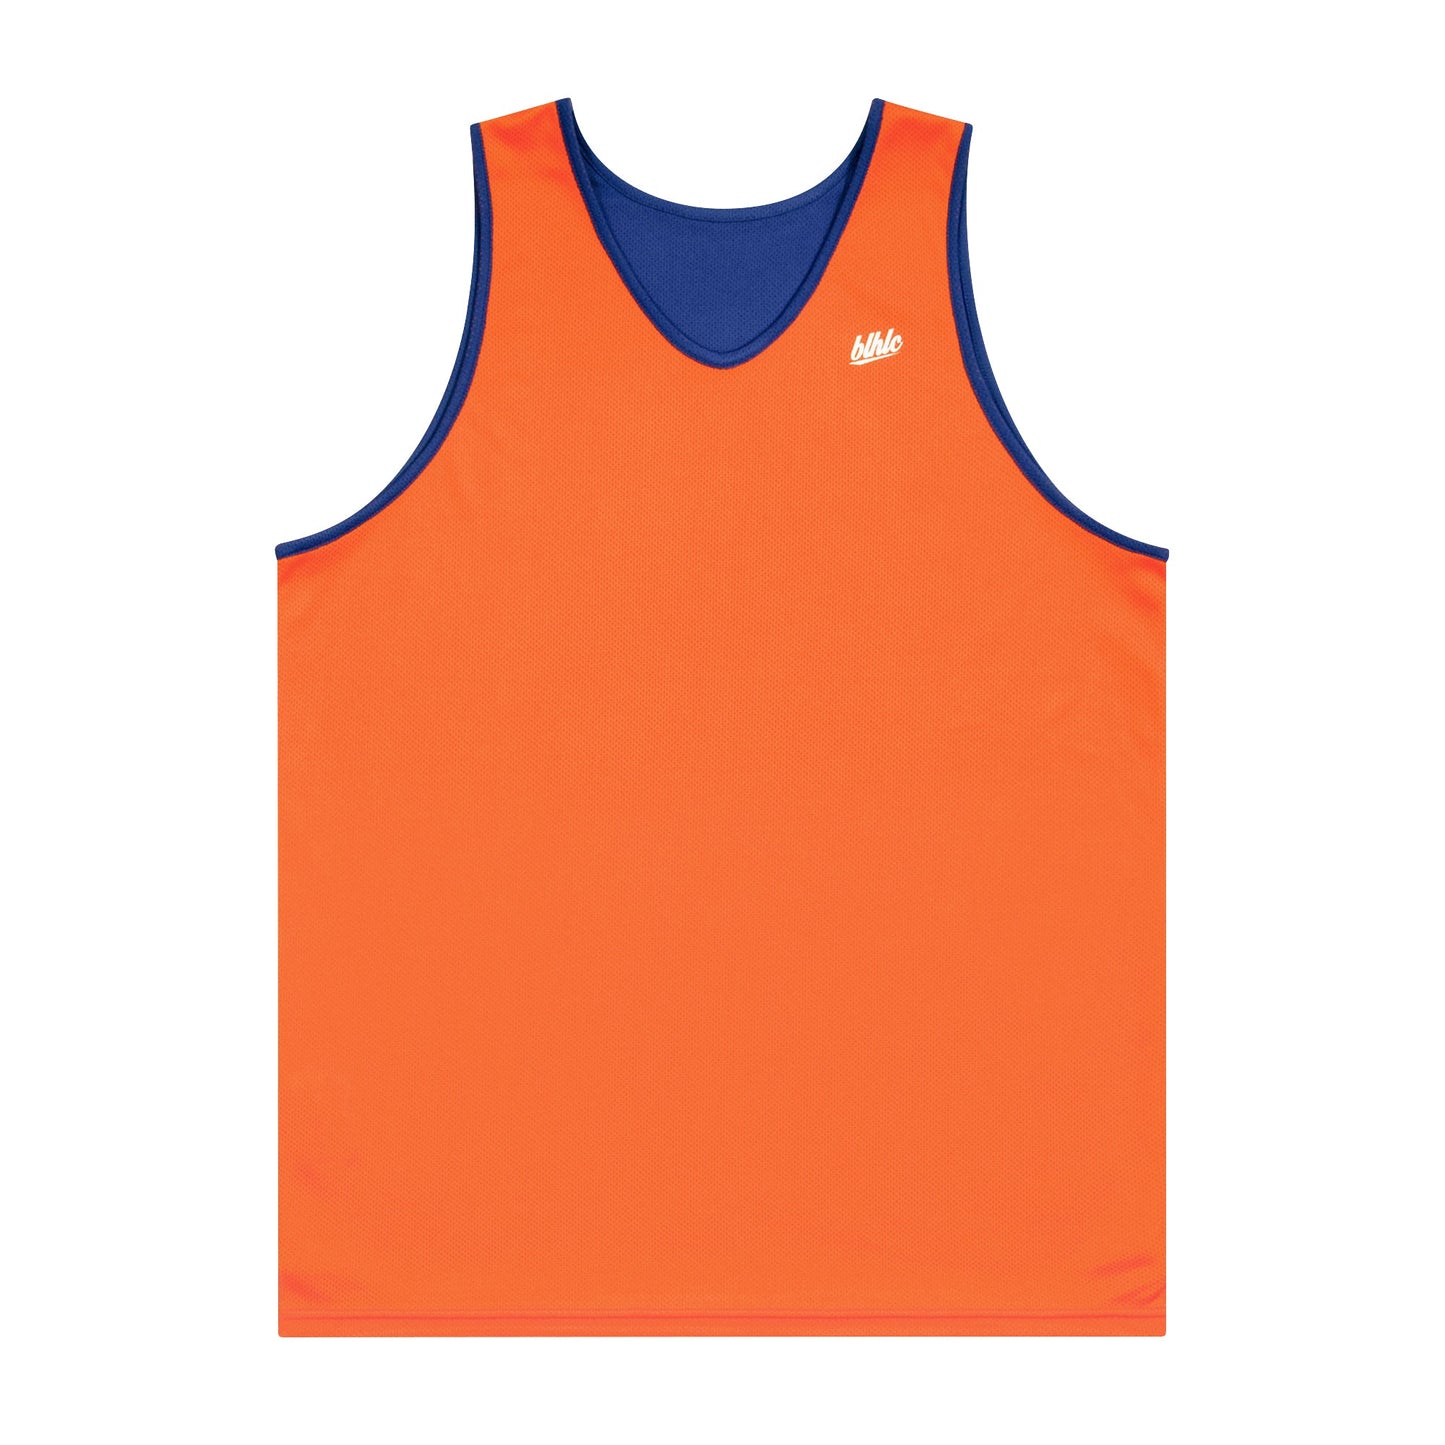 Basic Reversible Jersey (blue/orange) - CUSTOM